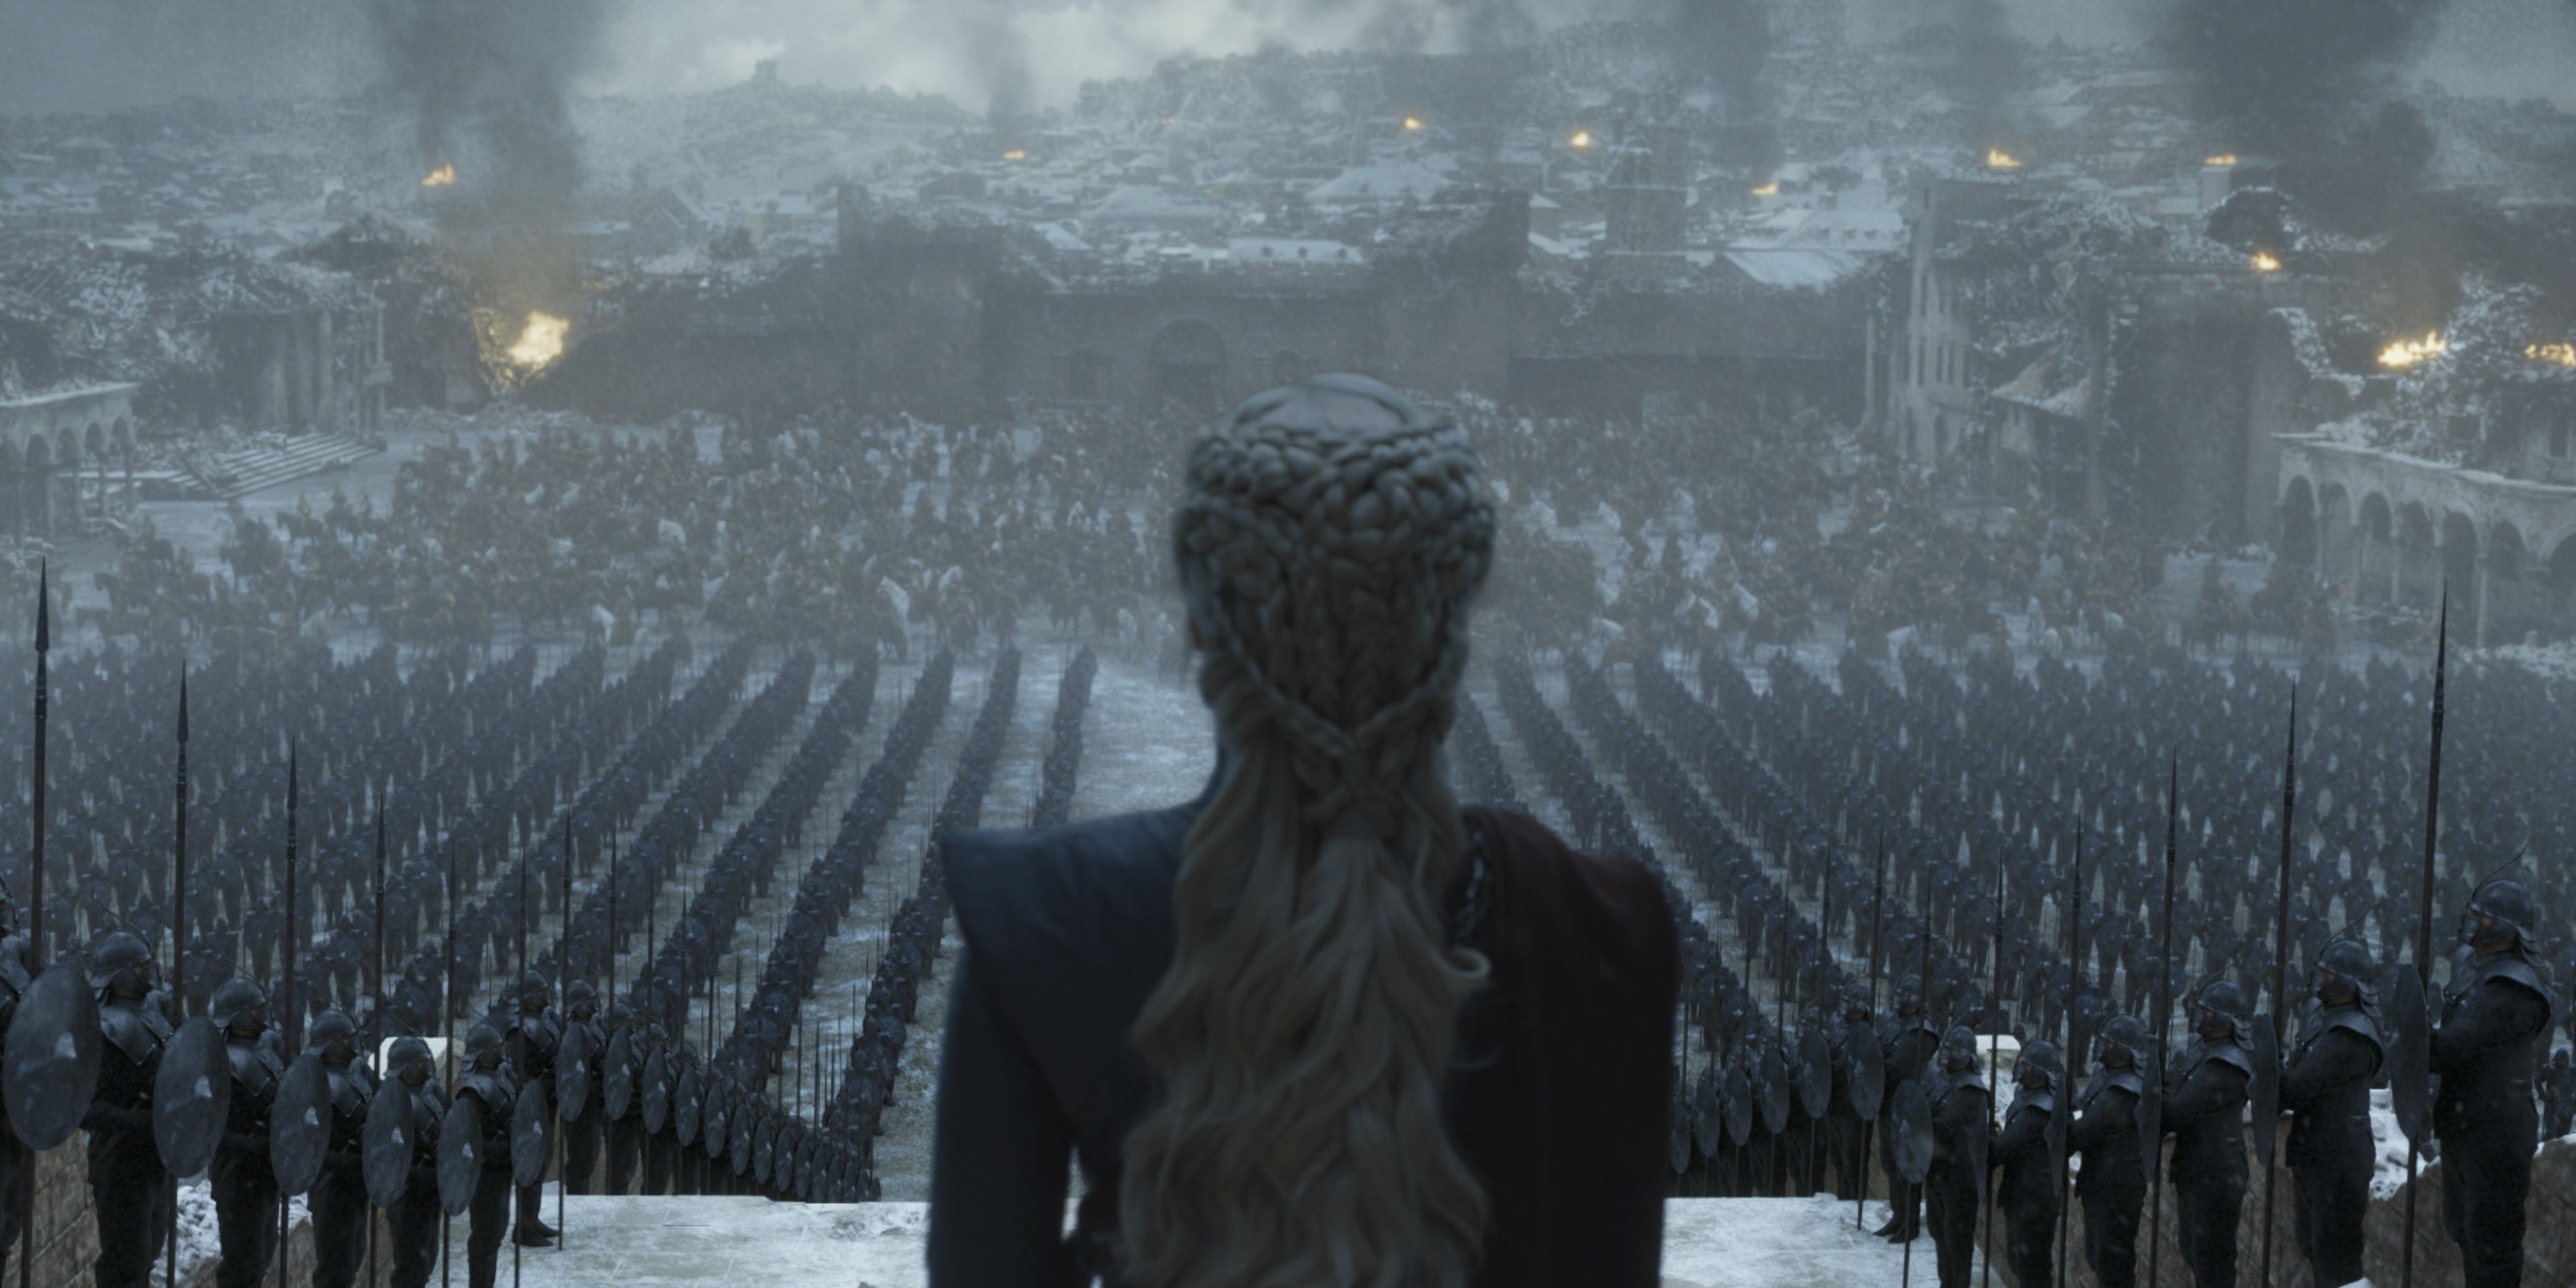 An image of Daenerys Targaryen standing in front of the Dothraki in Game of Thrones